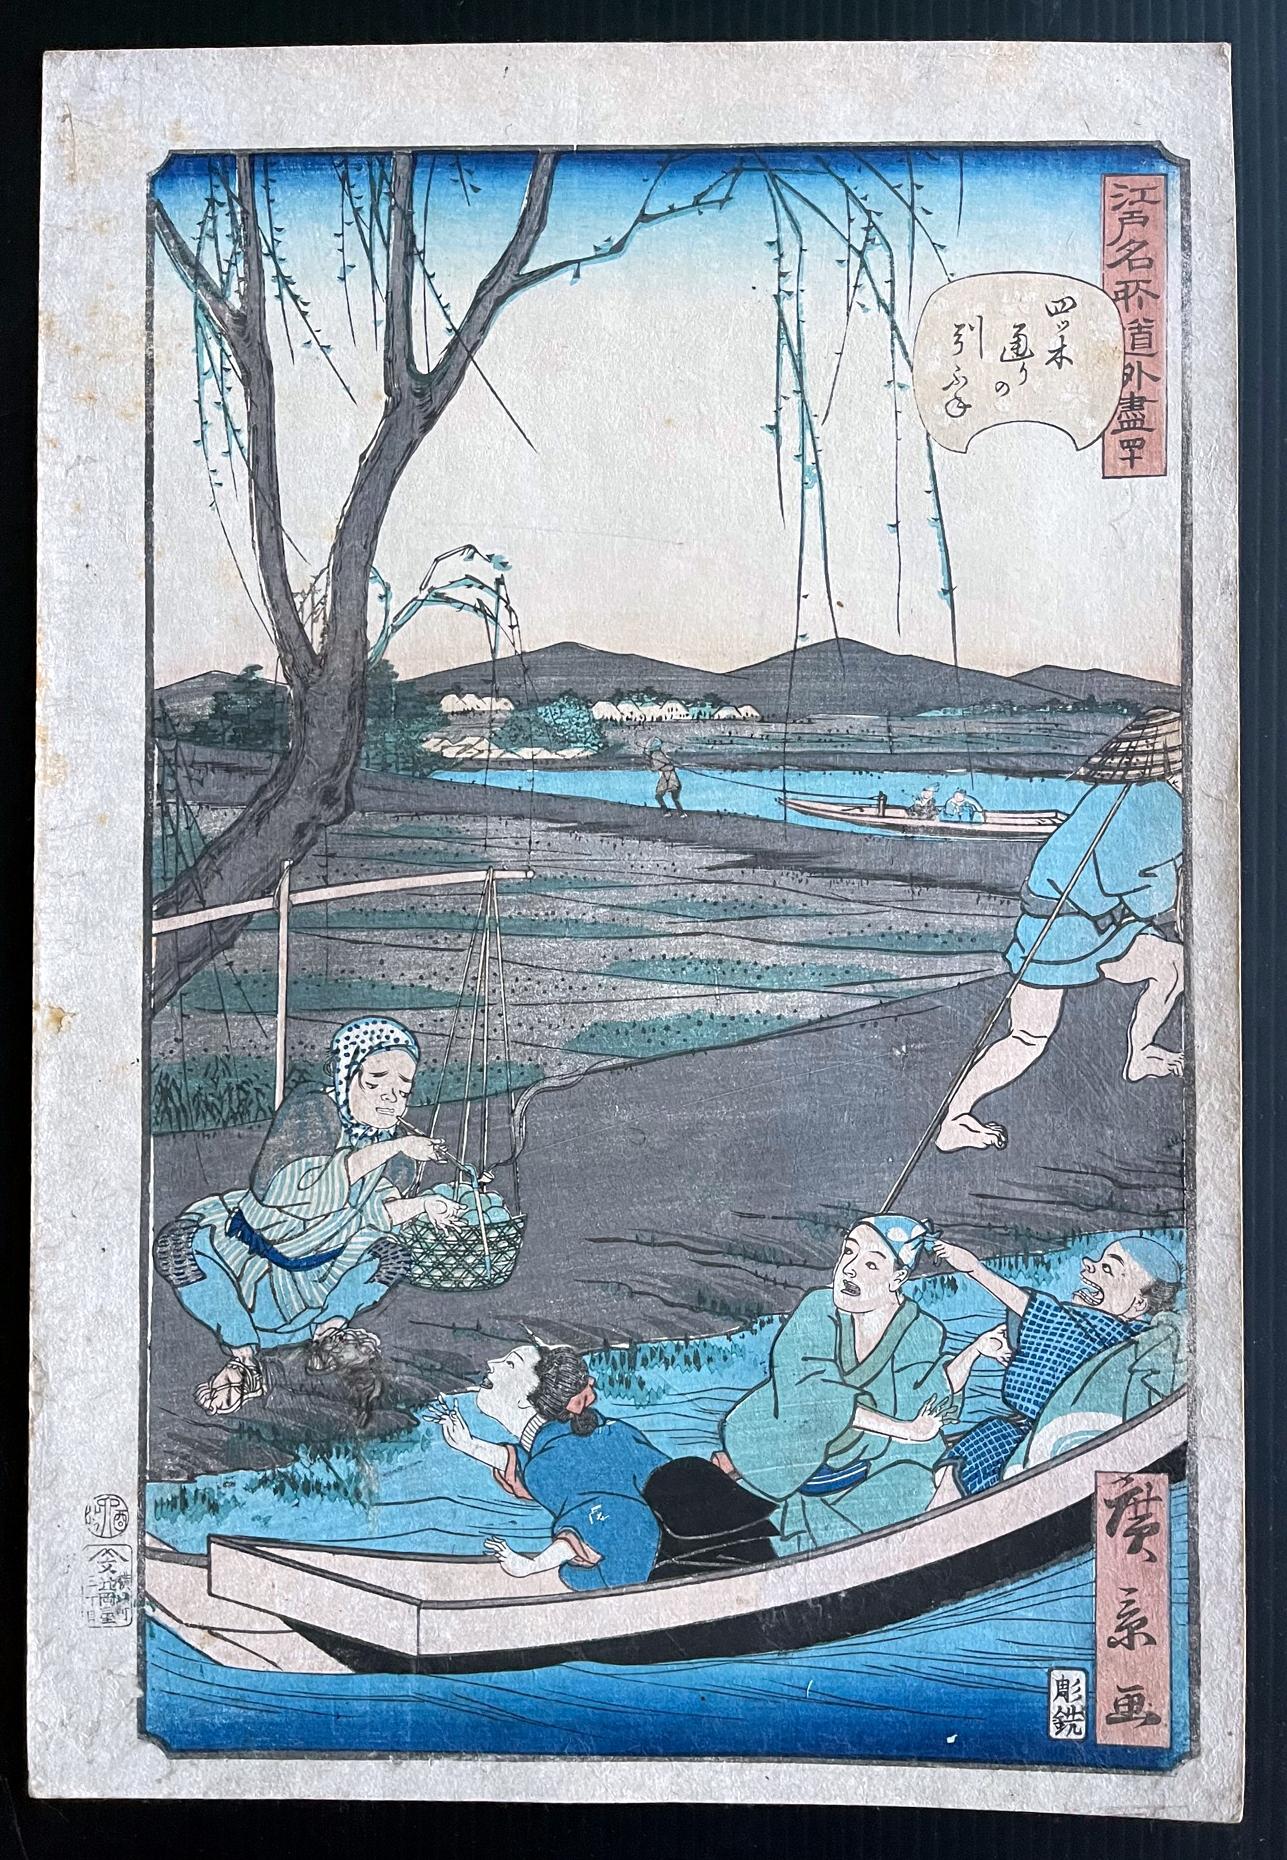 Künstler: Utagawa Hirokage (tätig 1855-1865)
Serie: Komische Ansichten berühmter Orte in Edo
Nummer: 40 